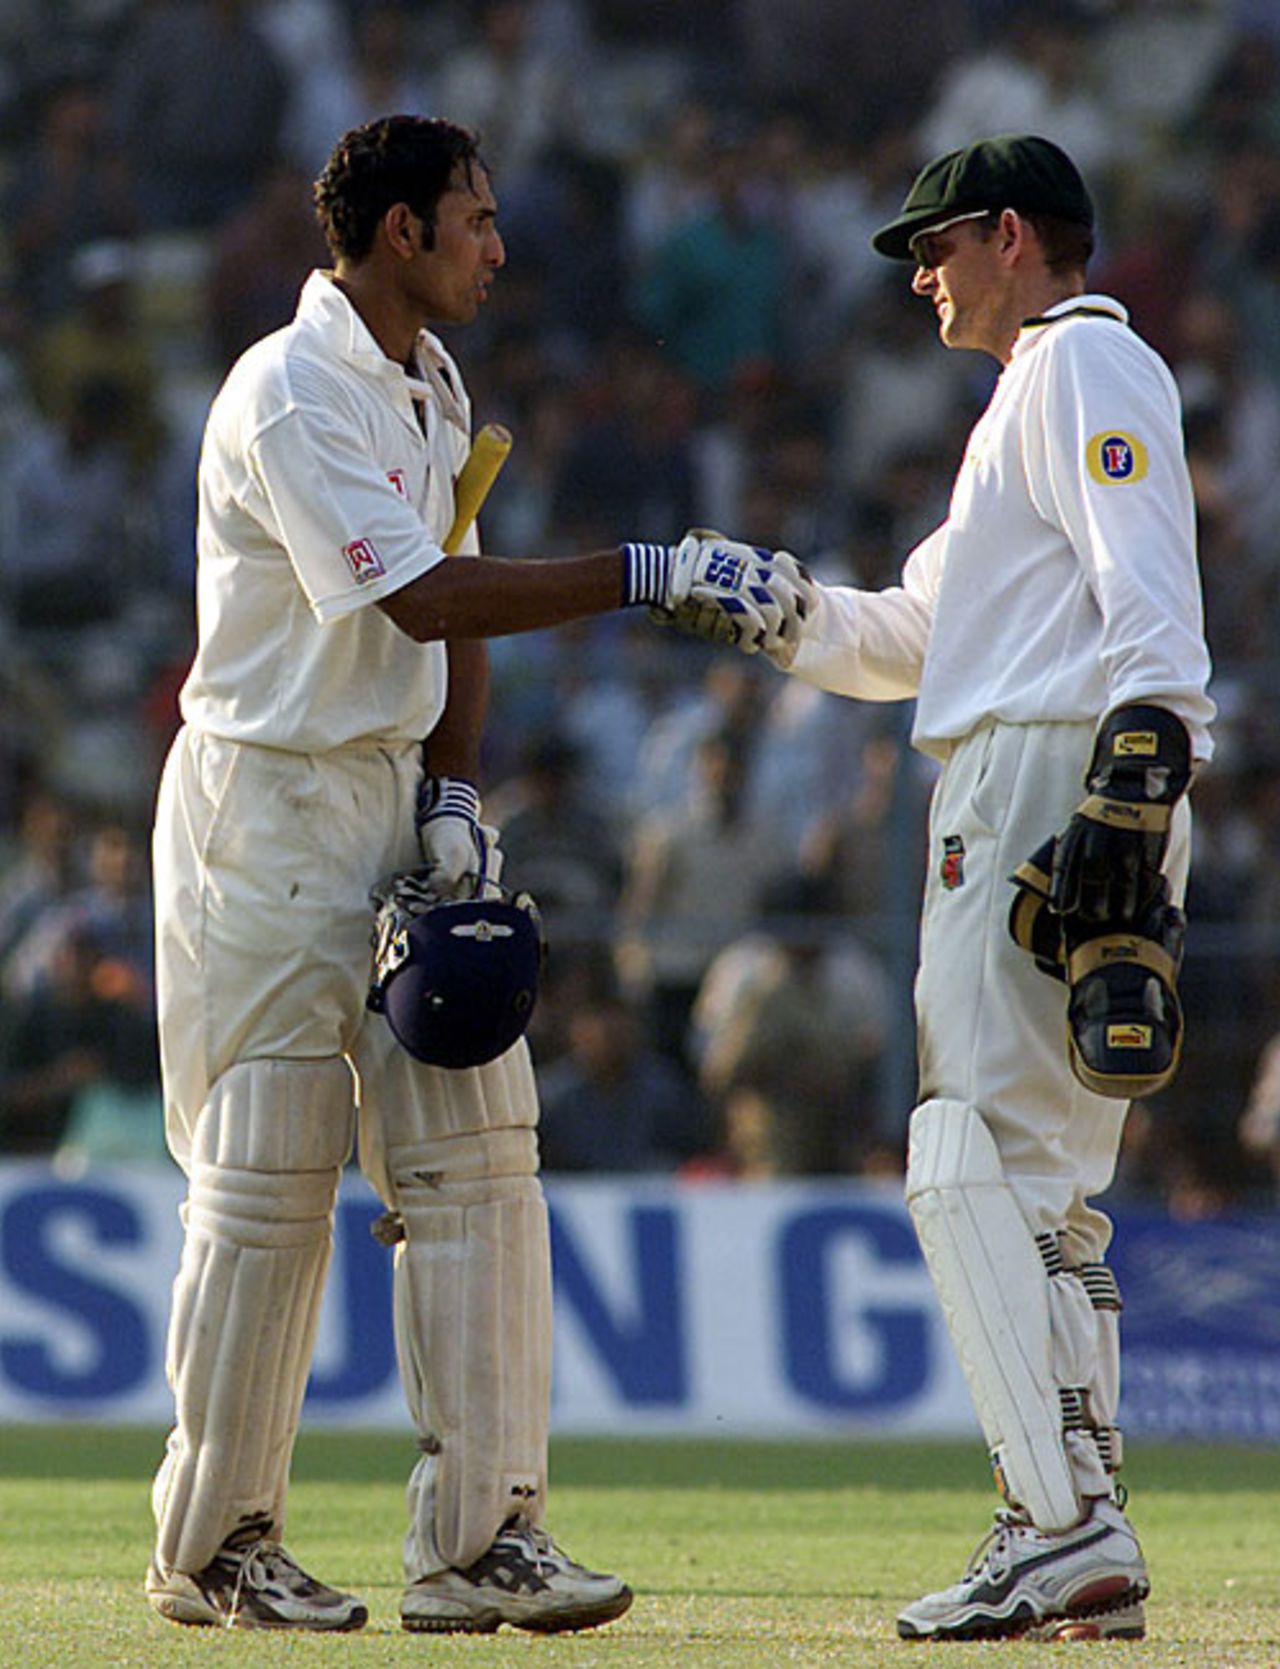 Adam Gilchrist congratulates VVS Laxman on his epic innings, India v Australia, 2nd Test, Kolkata, 4th day, March 14, 2001